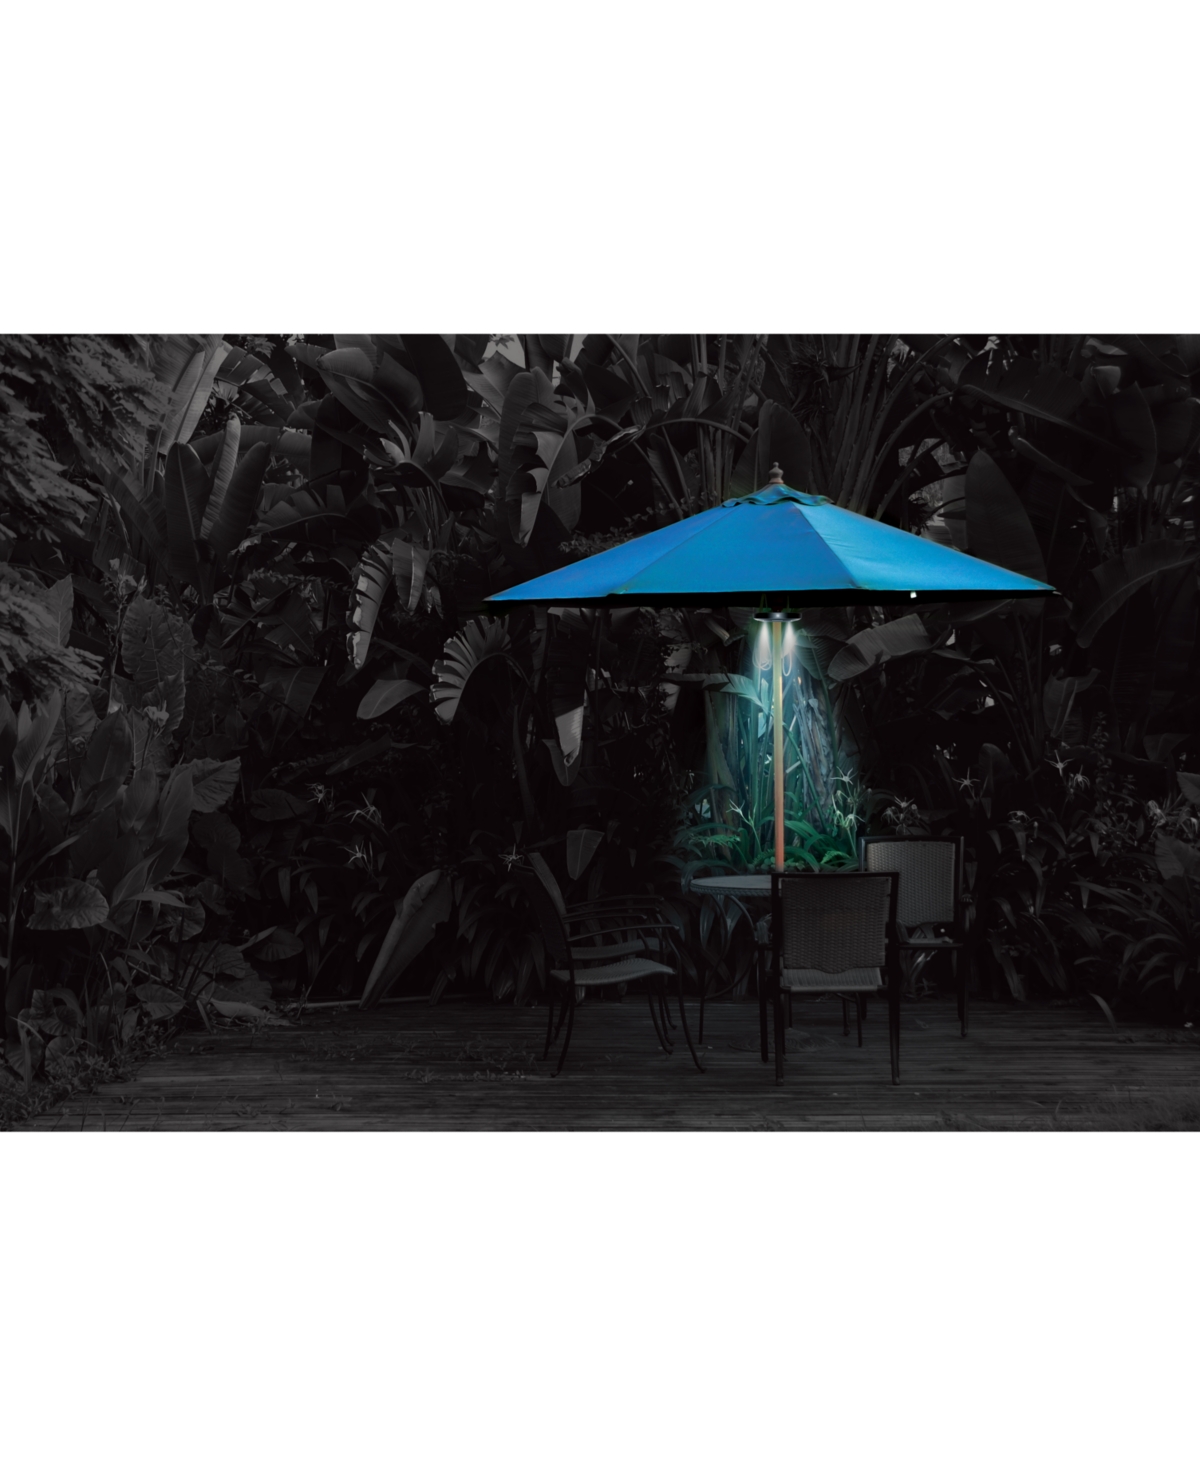 Brookstone Patiolite Wireless Led Umbrella Speaker With Clip-on Design In Black